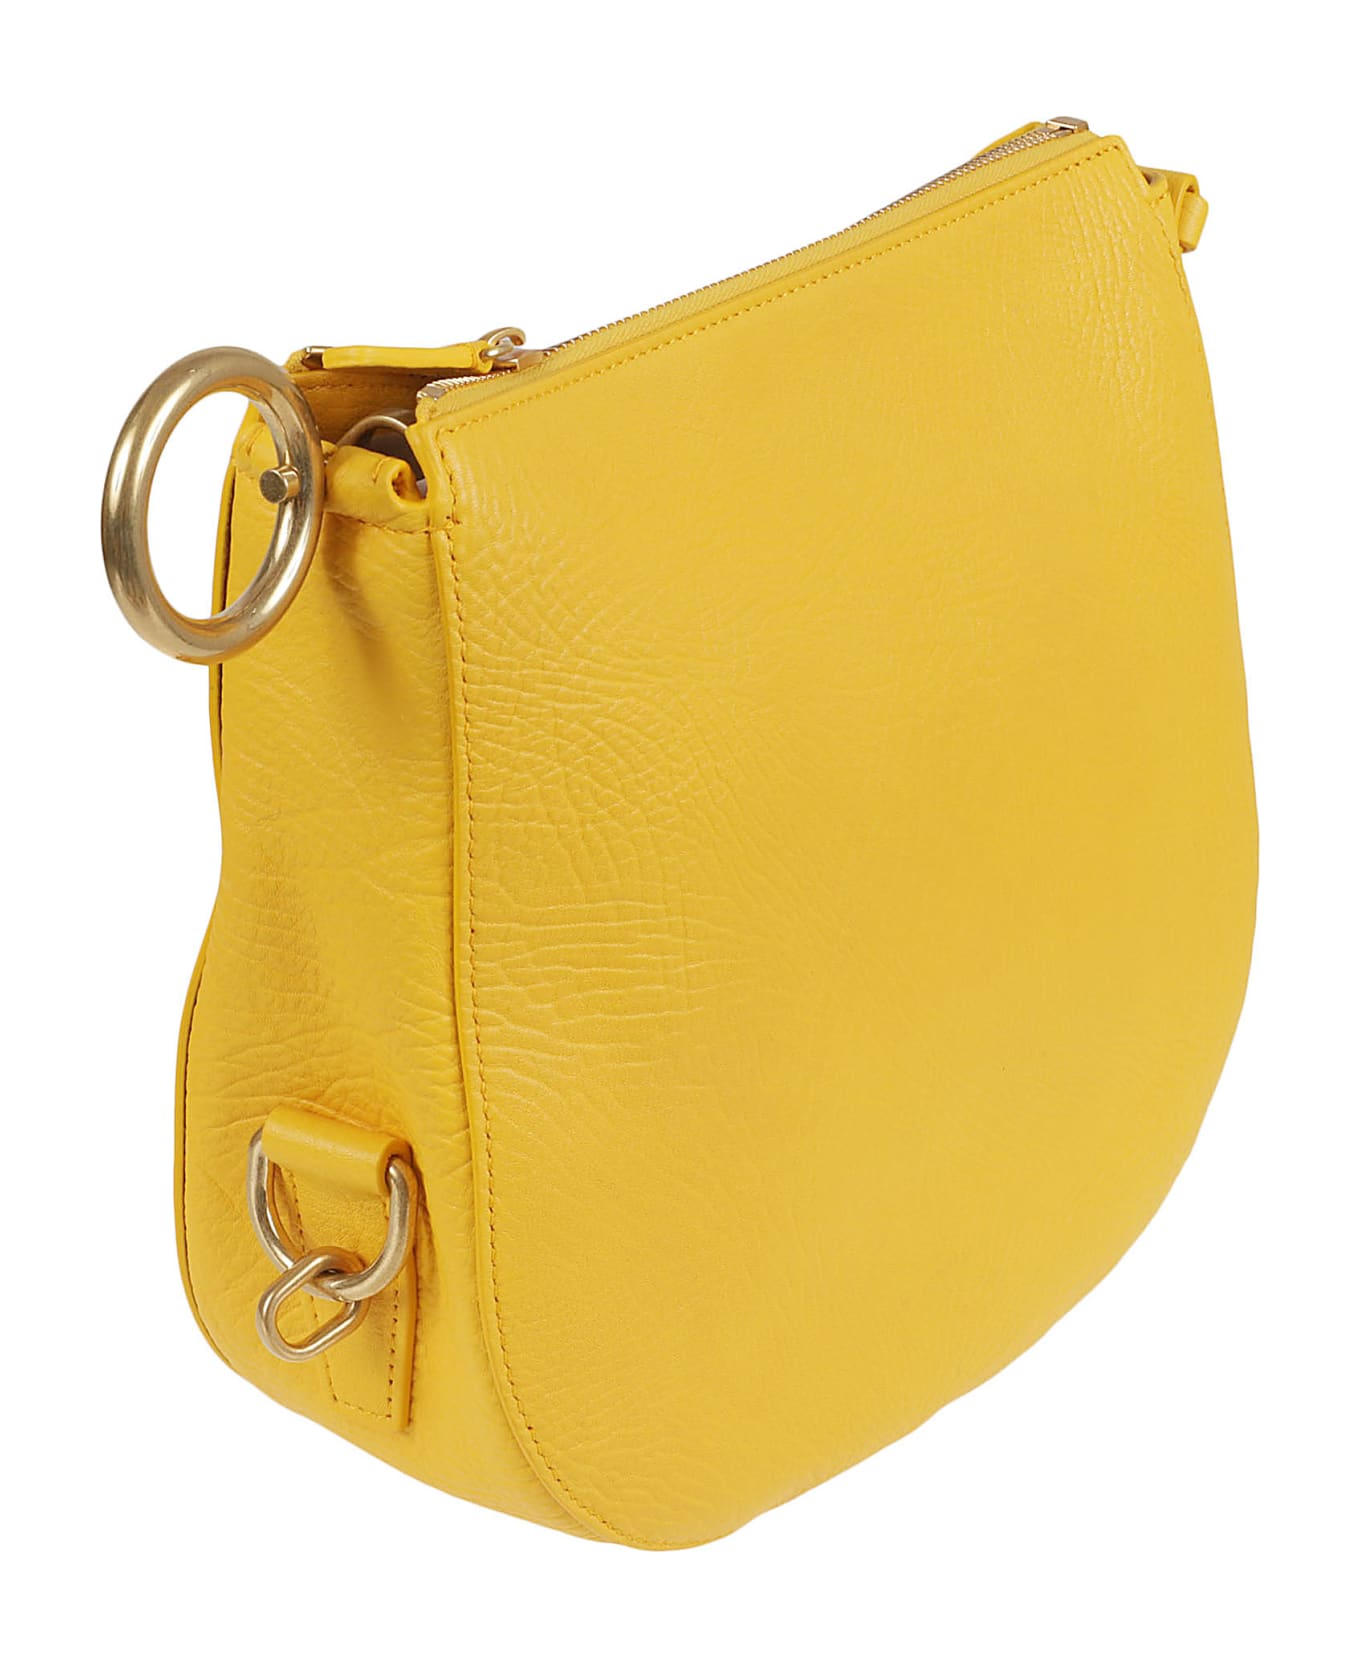 Burberry Knight Lgl Shoulder Bag - Yellow トートバッグ